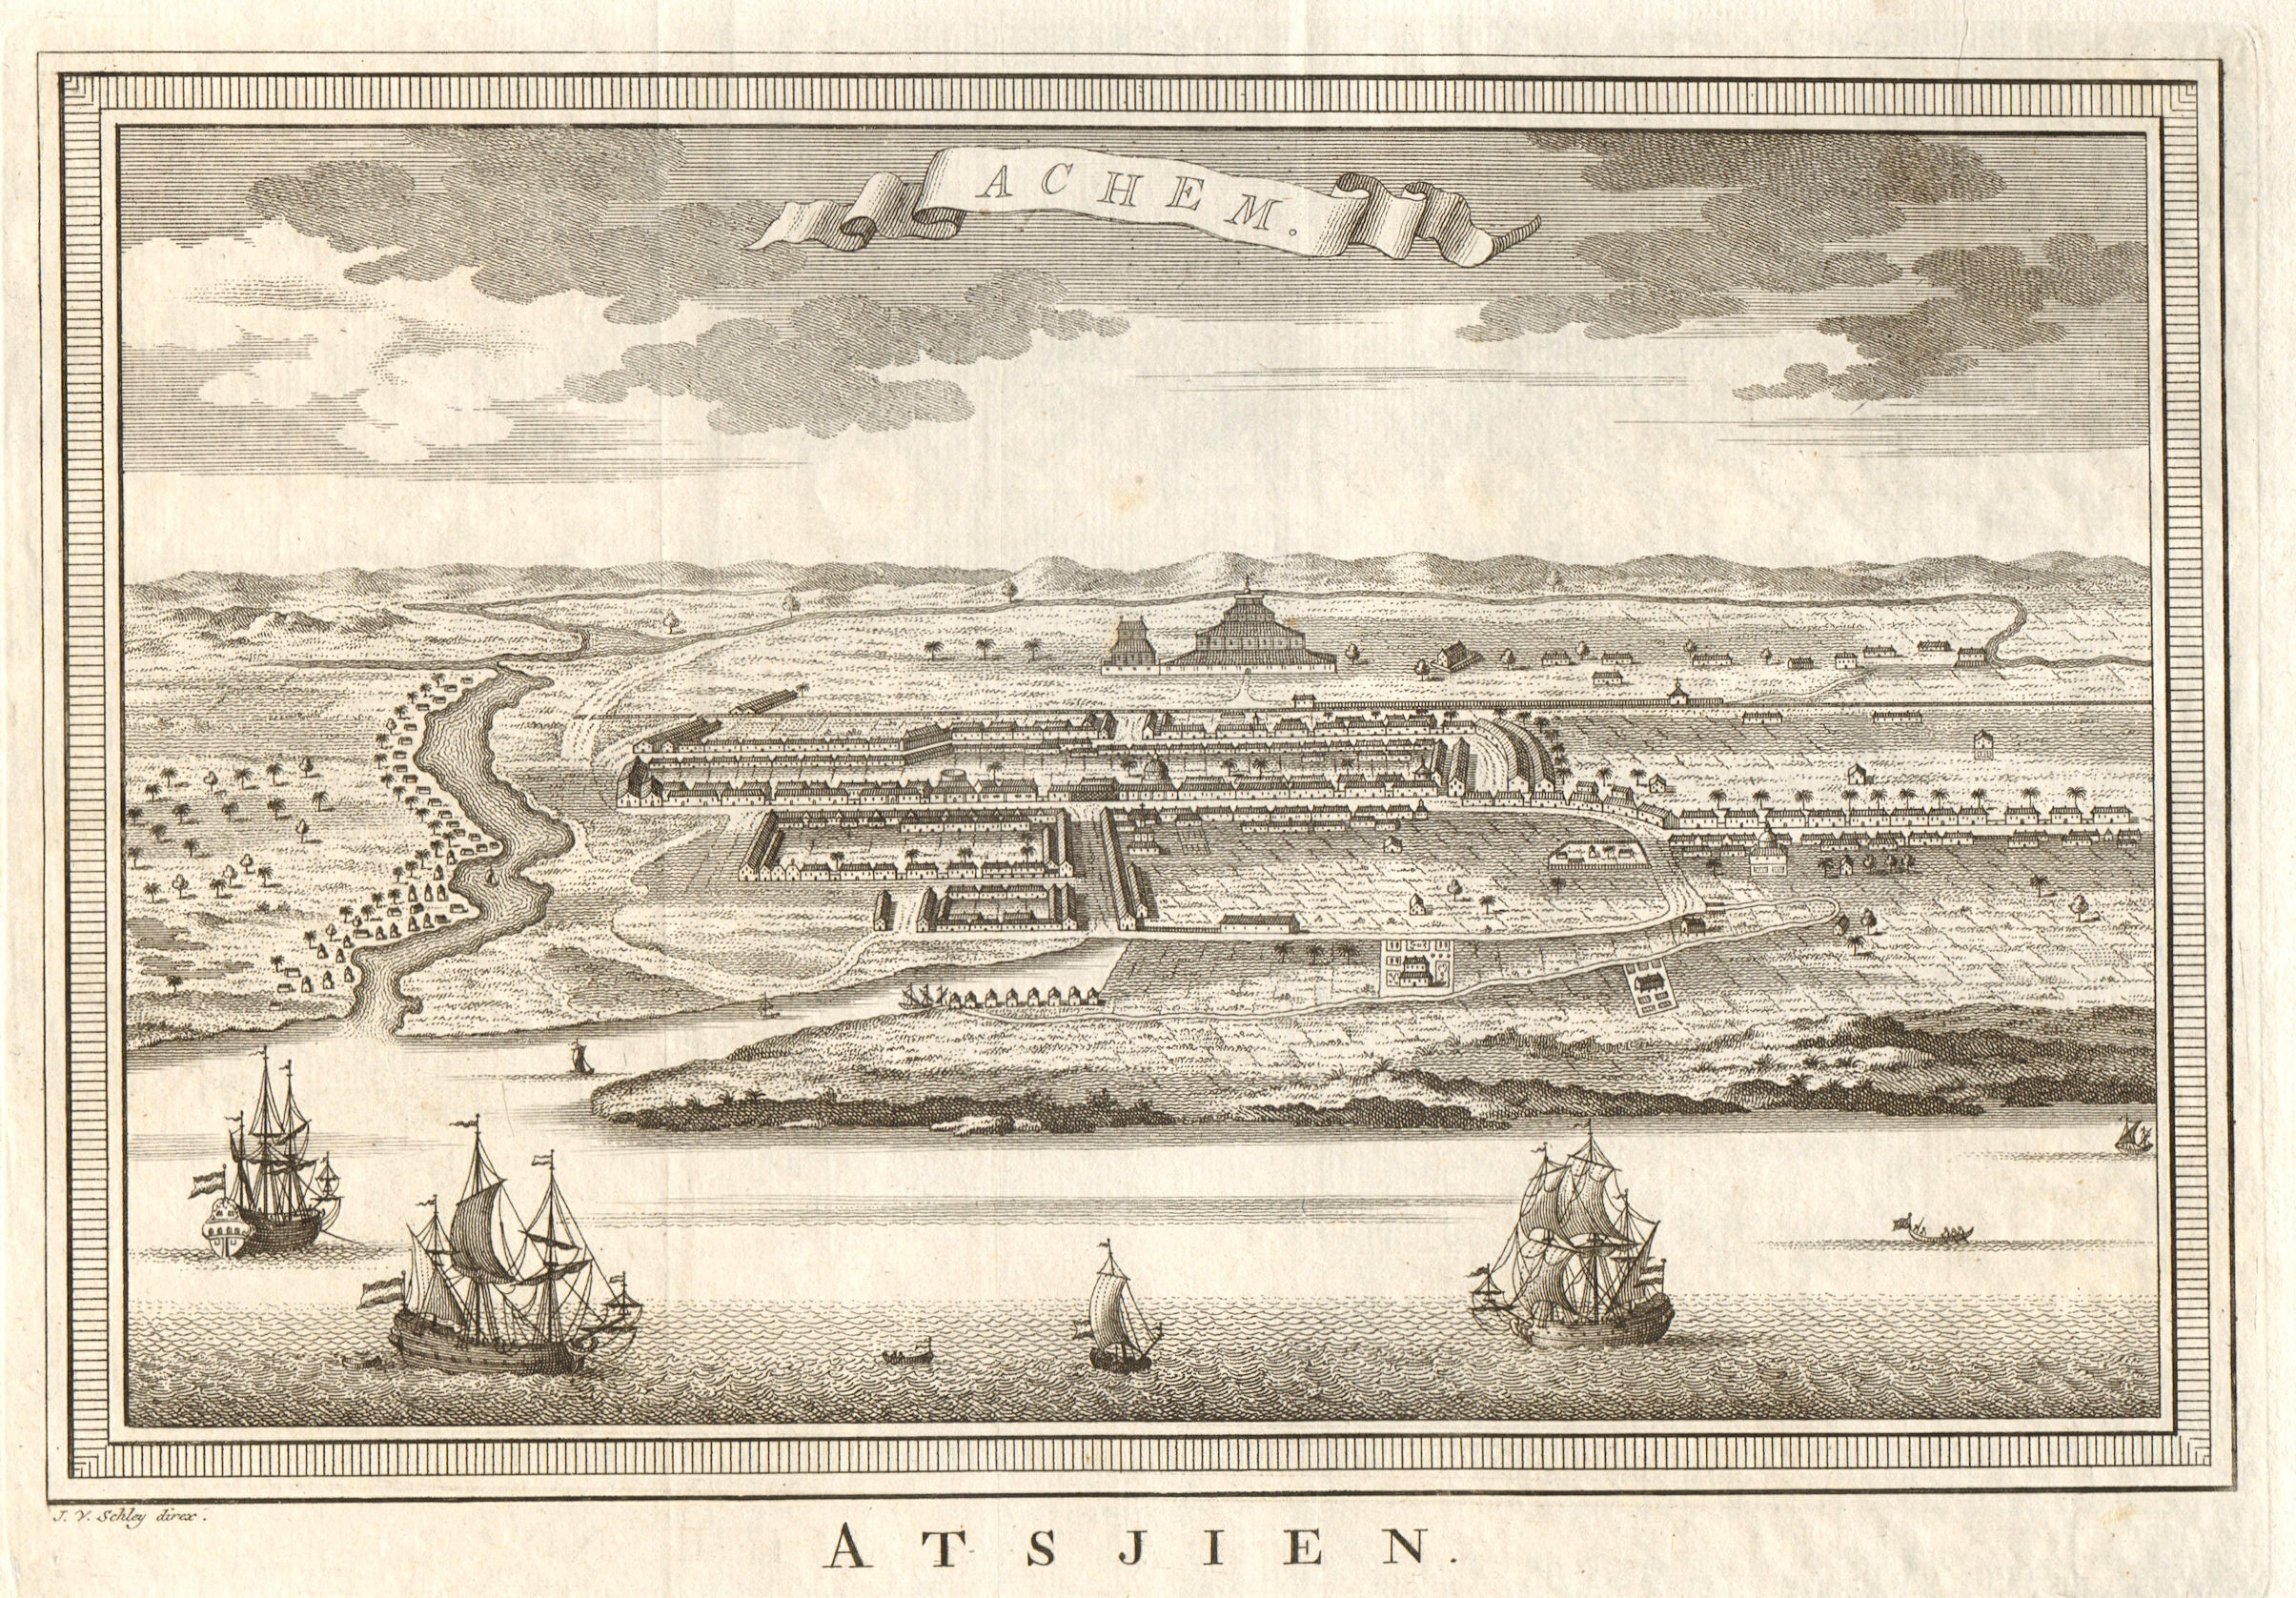 'Achem'. Kutaraja (Banda Aceh), Sumatra. Indonesia. East Indies. SCHLEY 1755